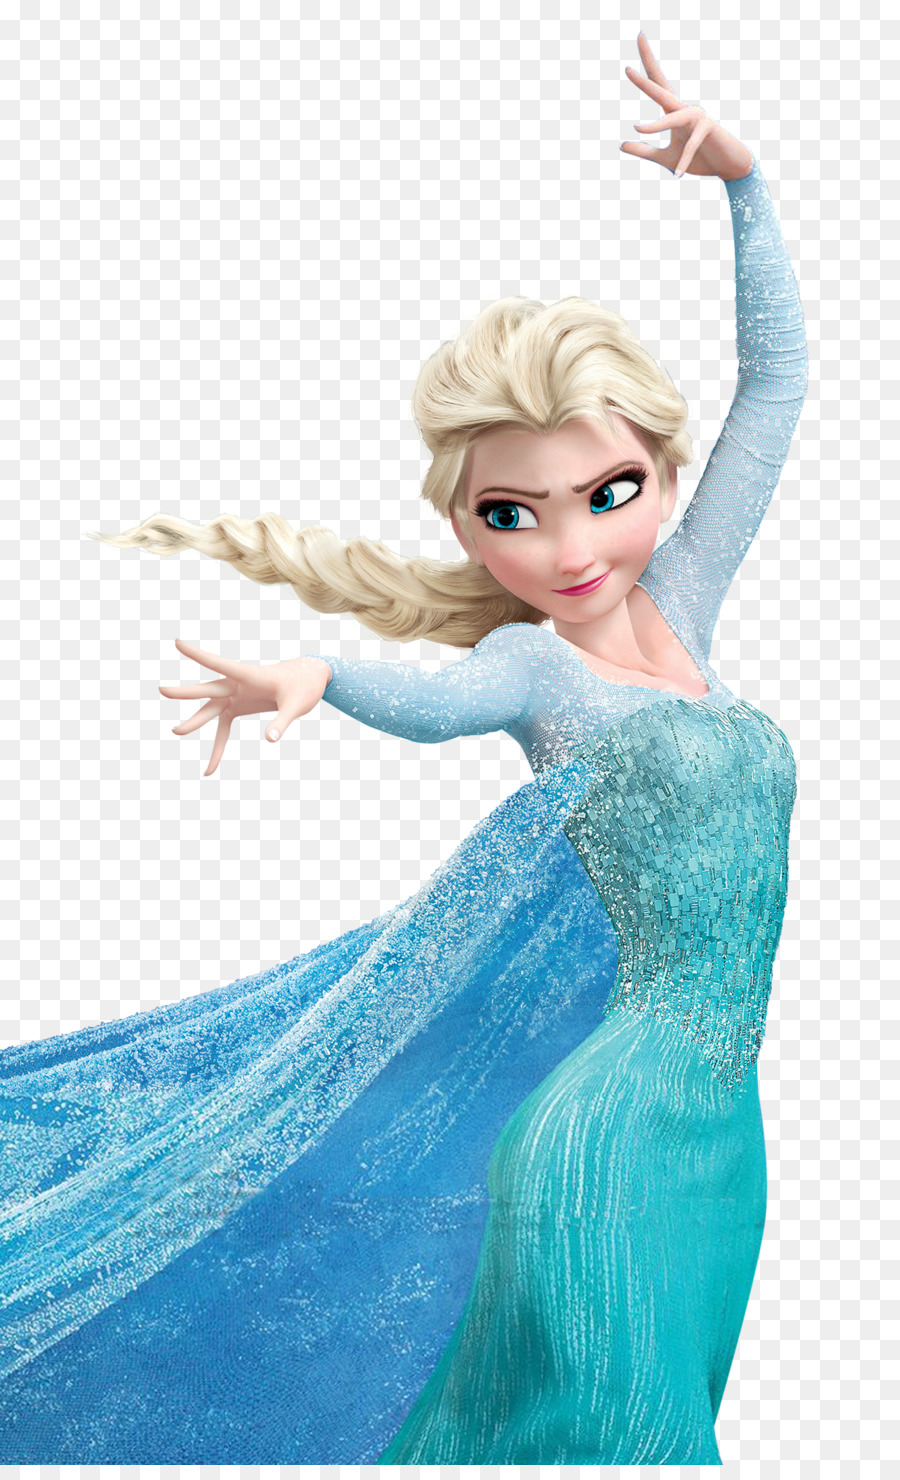 Elsa Frozen Anna Olaf Convite - Frozen fever png download - 1329*2164 - Free Transparent Elsa png Download.